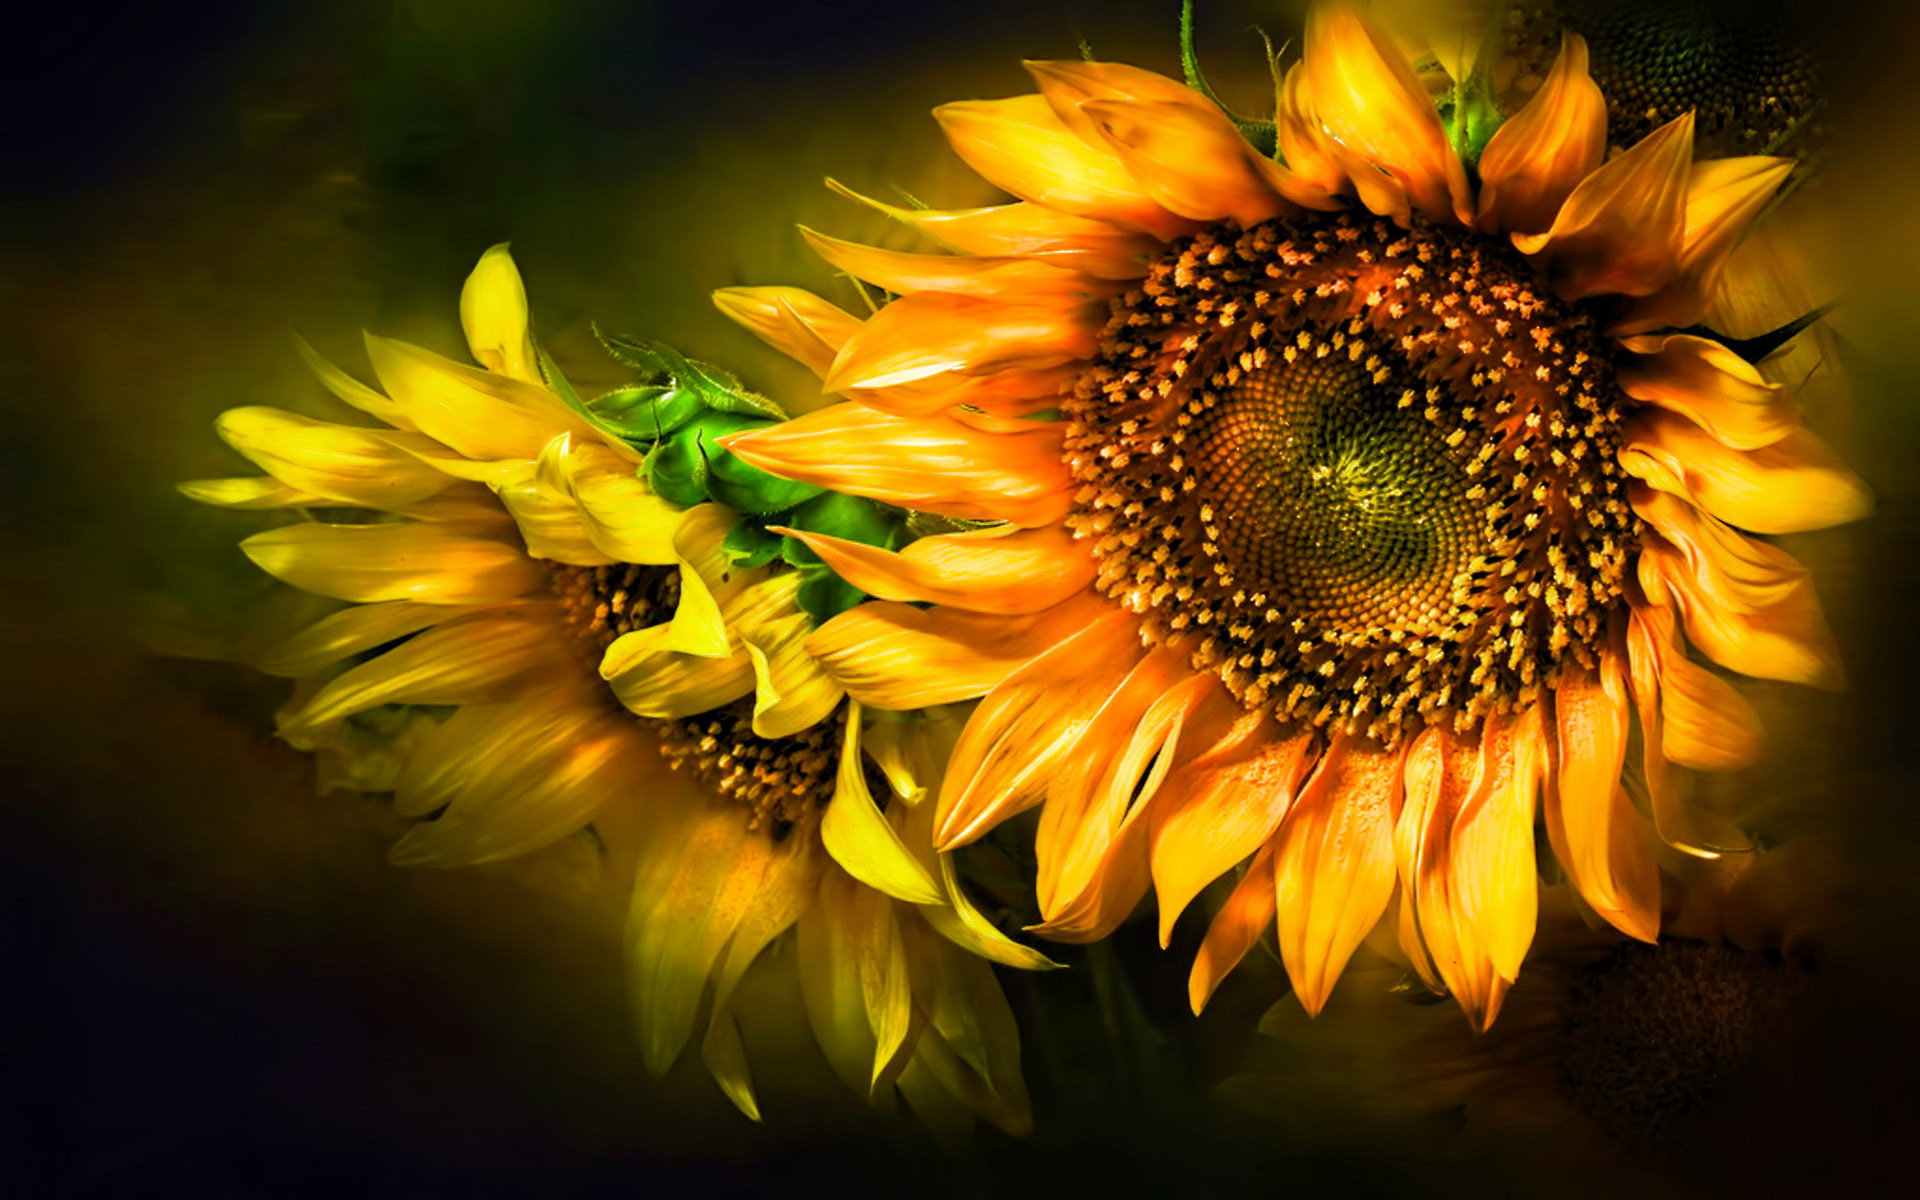 261 Sunflower HD Wallpapers | Backgrounds - Wallpaper Abyss